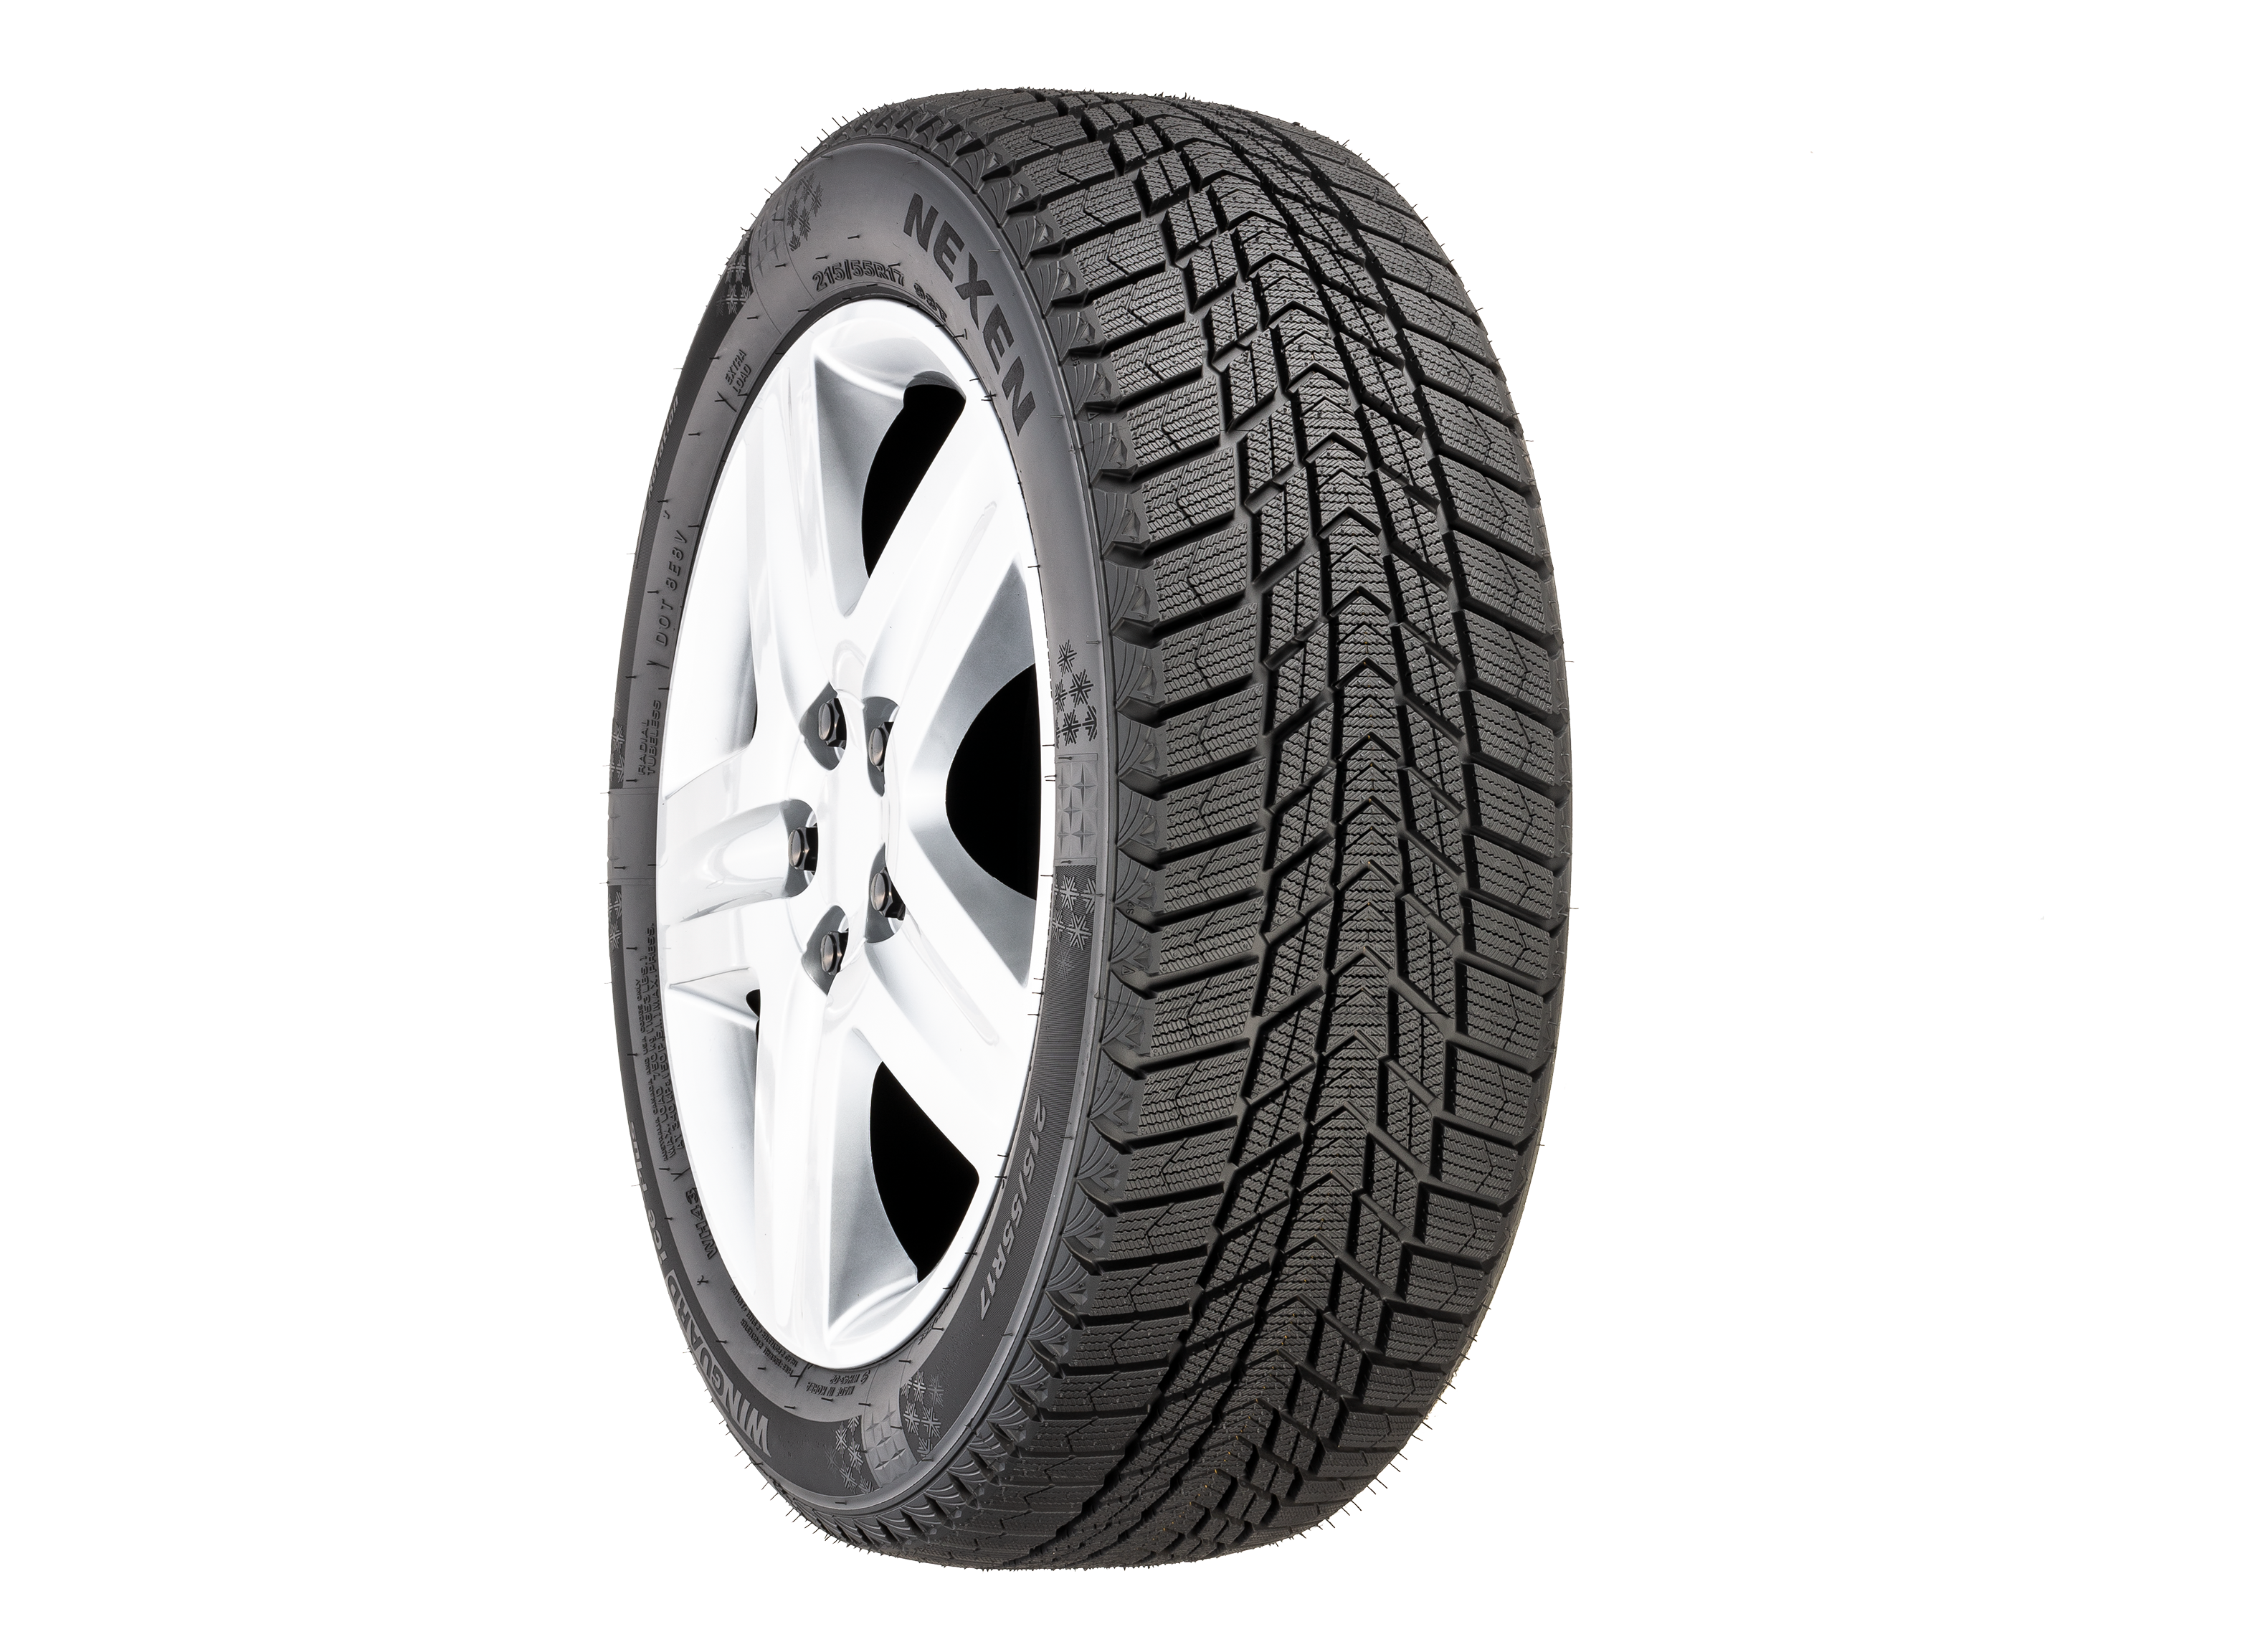 Nexen Winguard ice Plus Reports Tire Consumer - Review